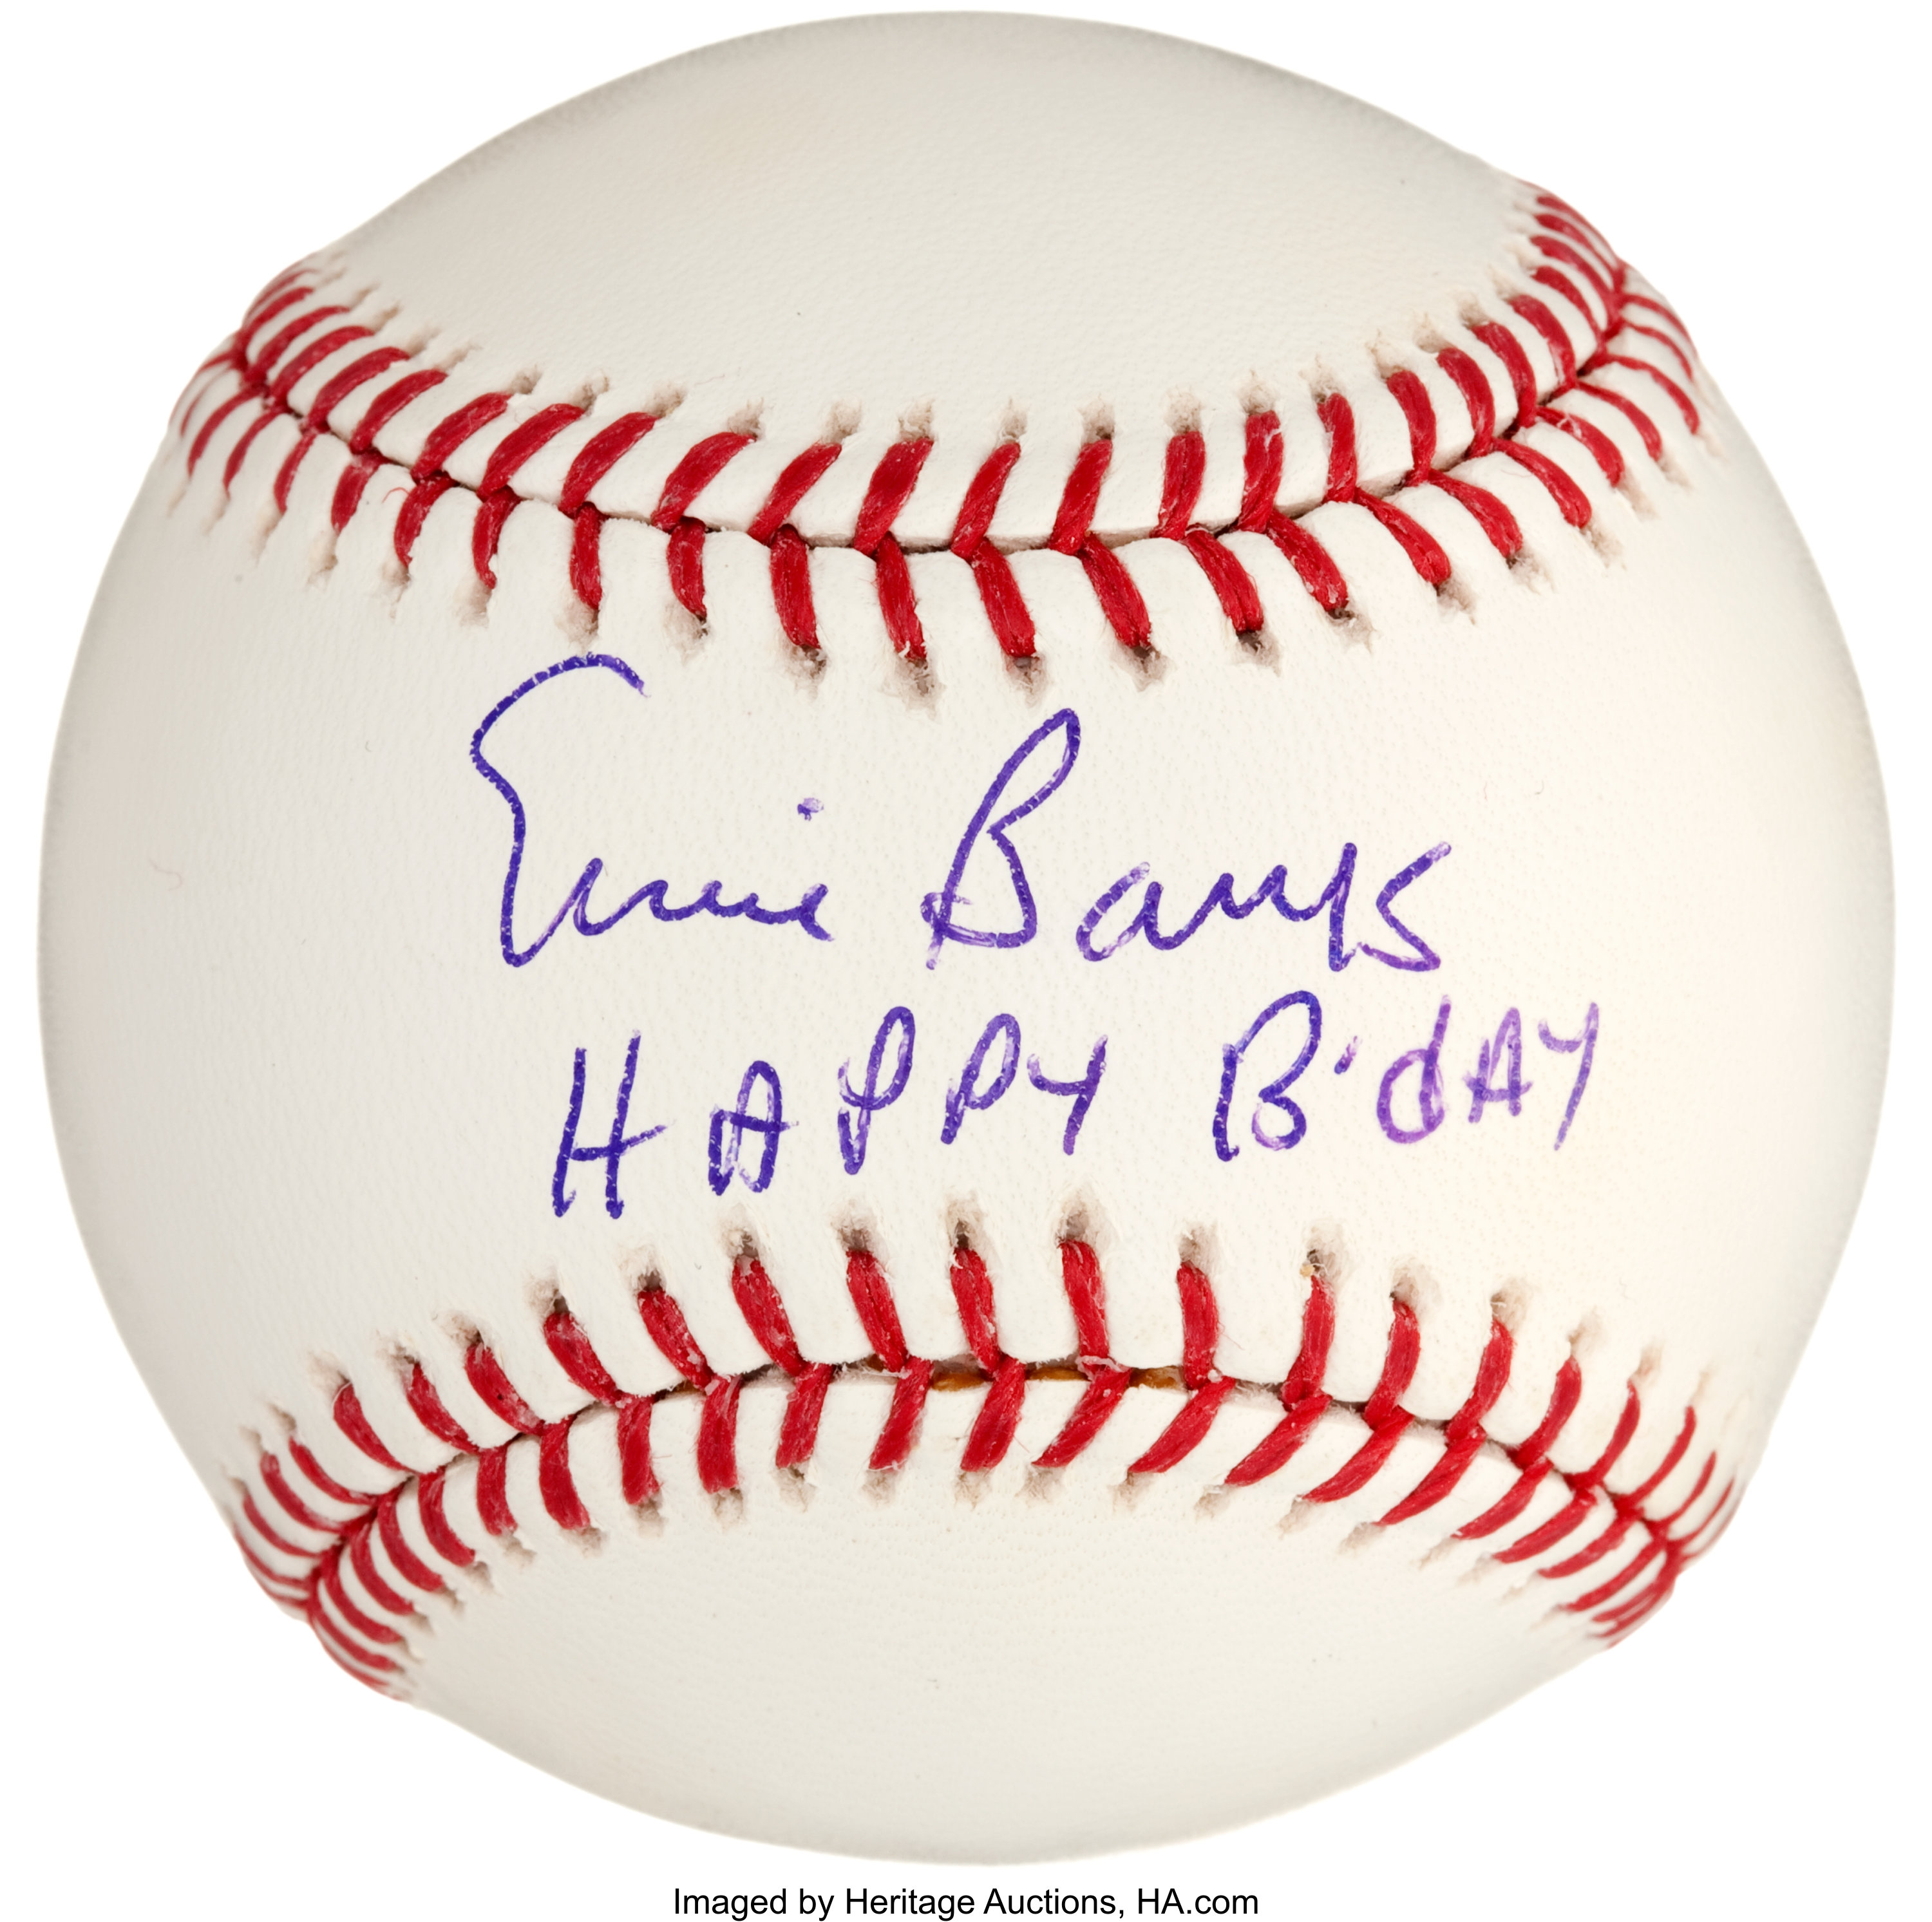 Ernie Banks Signed Baseball, Autographed Ernie Banks Baseball